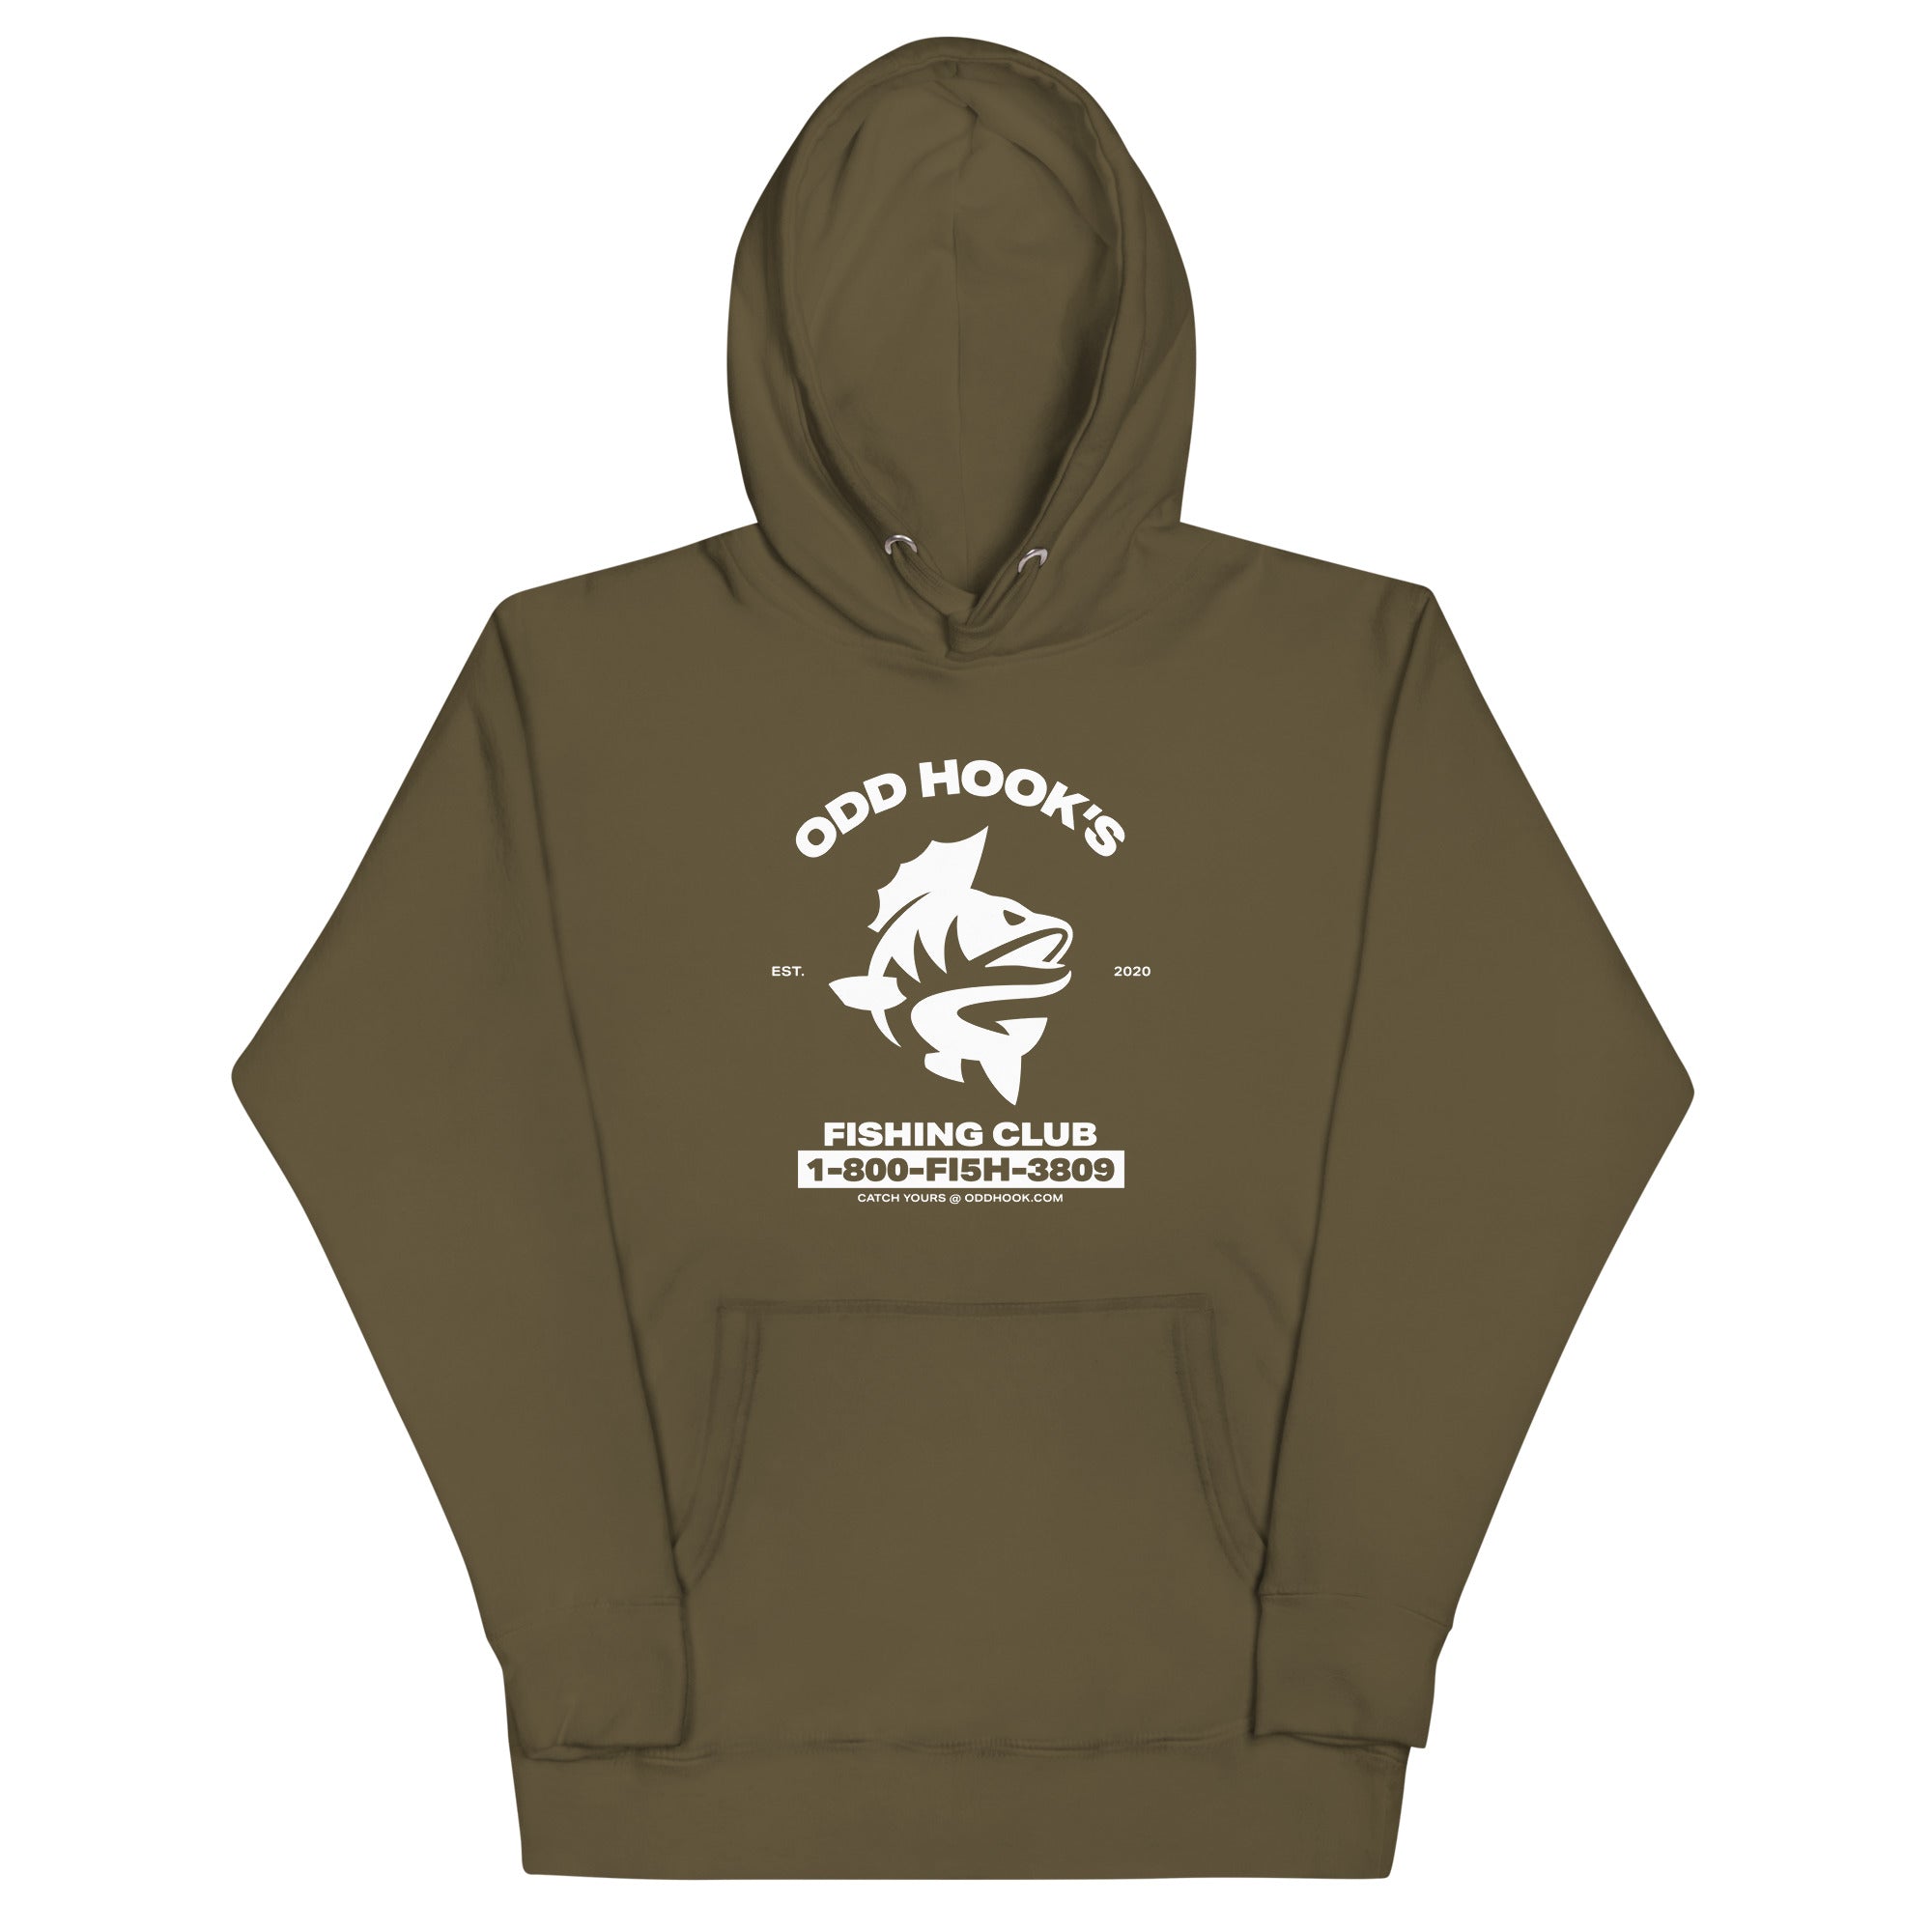 Perch Fishing Club - Hoodie - Oddhook